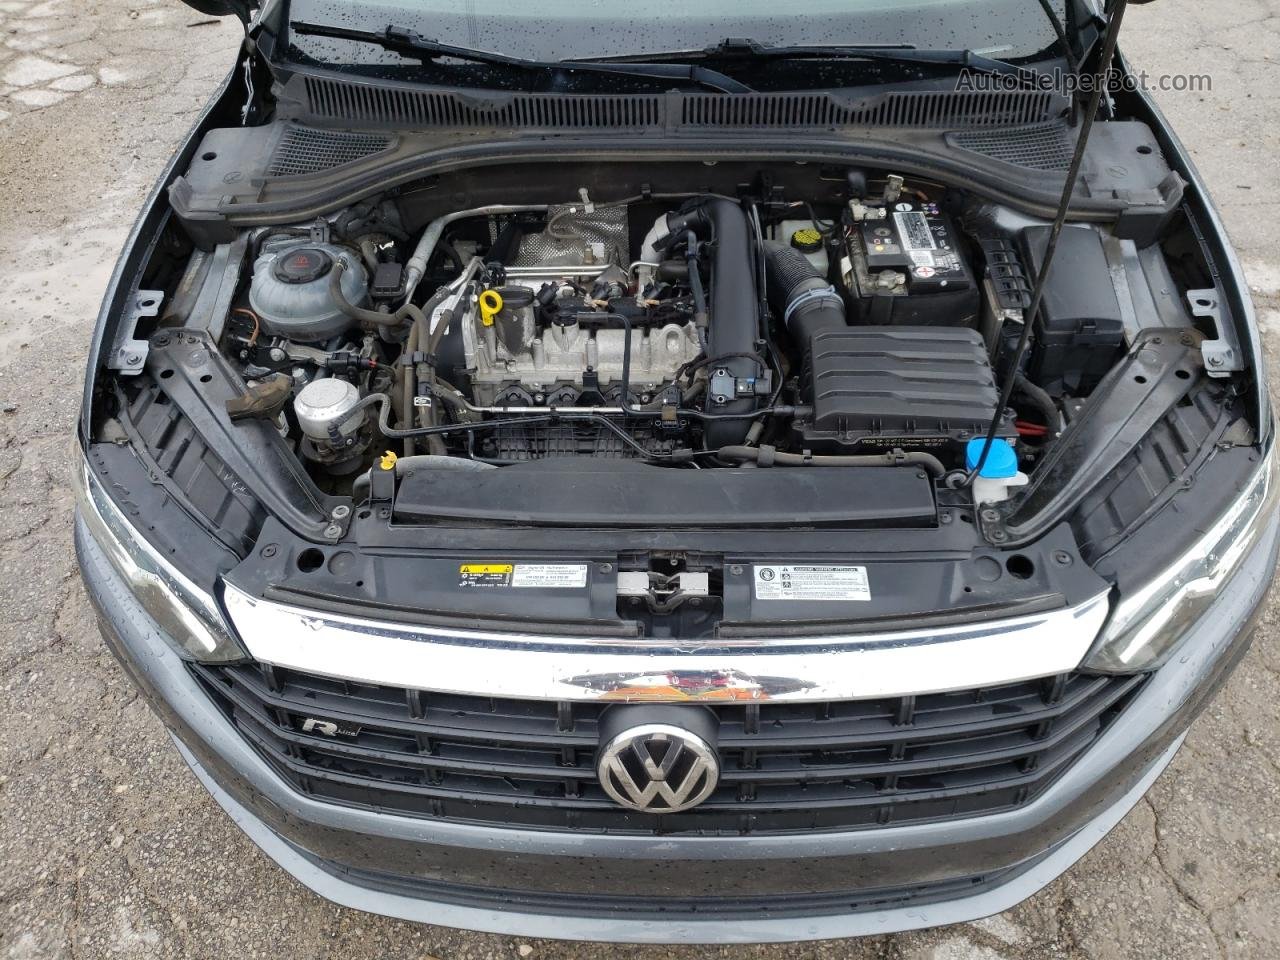 2019 Volkswagen Jetta S Серый vin: 3VWC57BU3KM225050